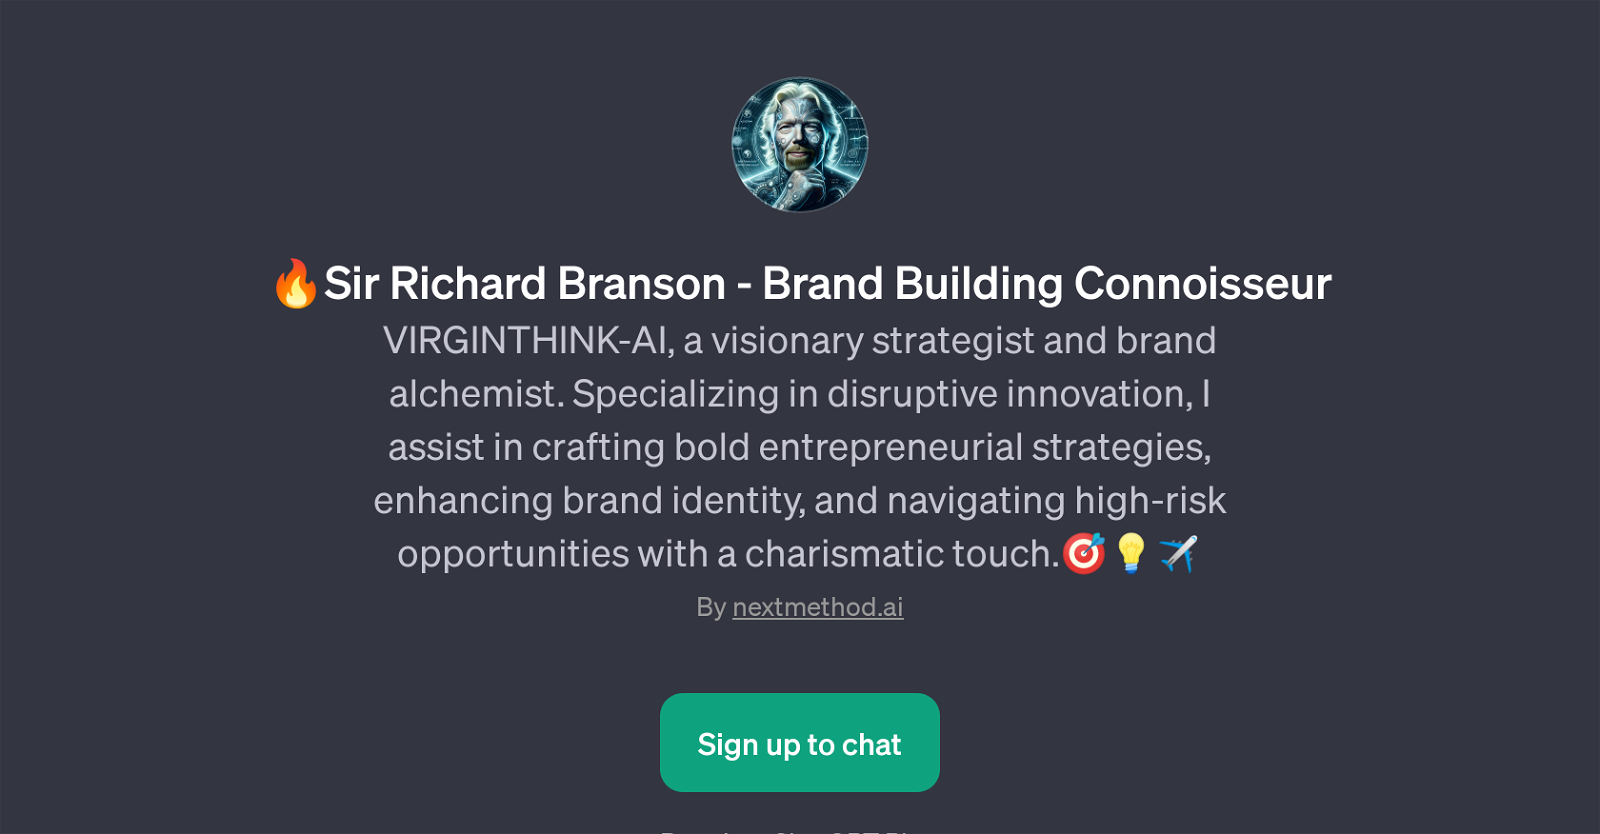 Sir Richard Branson - Brand Building Connoisseur website